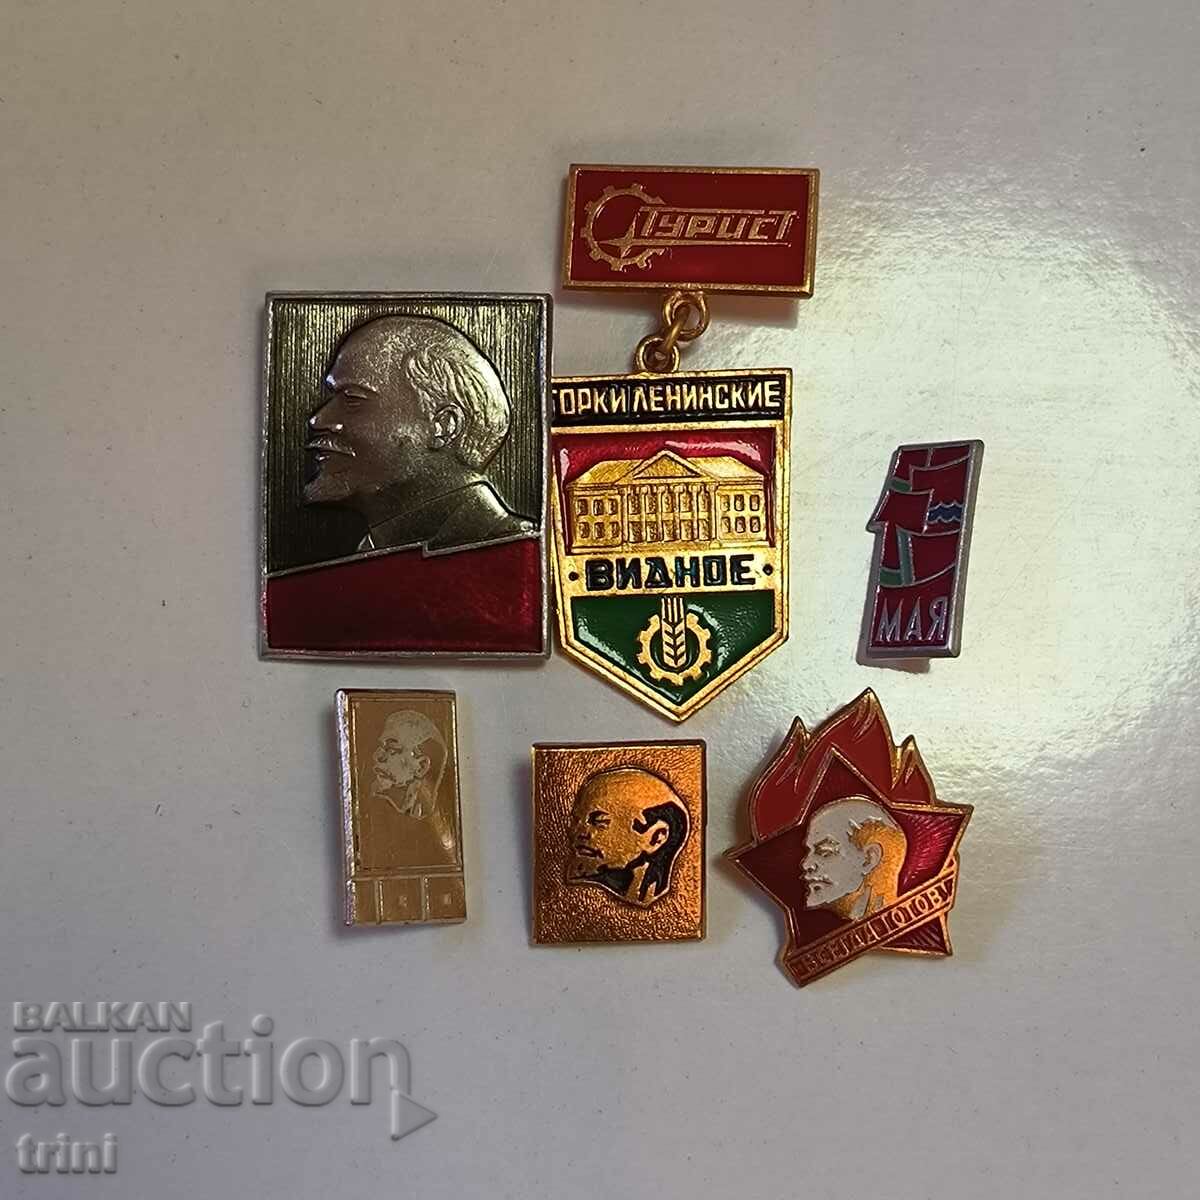 Lot of badges USSR, Lenin